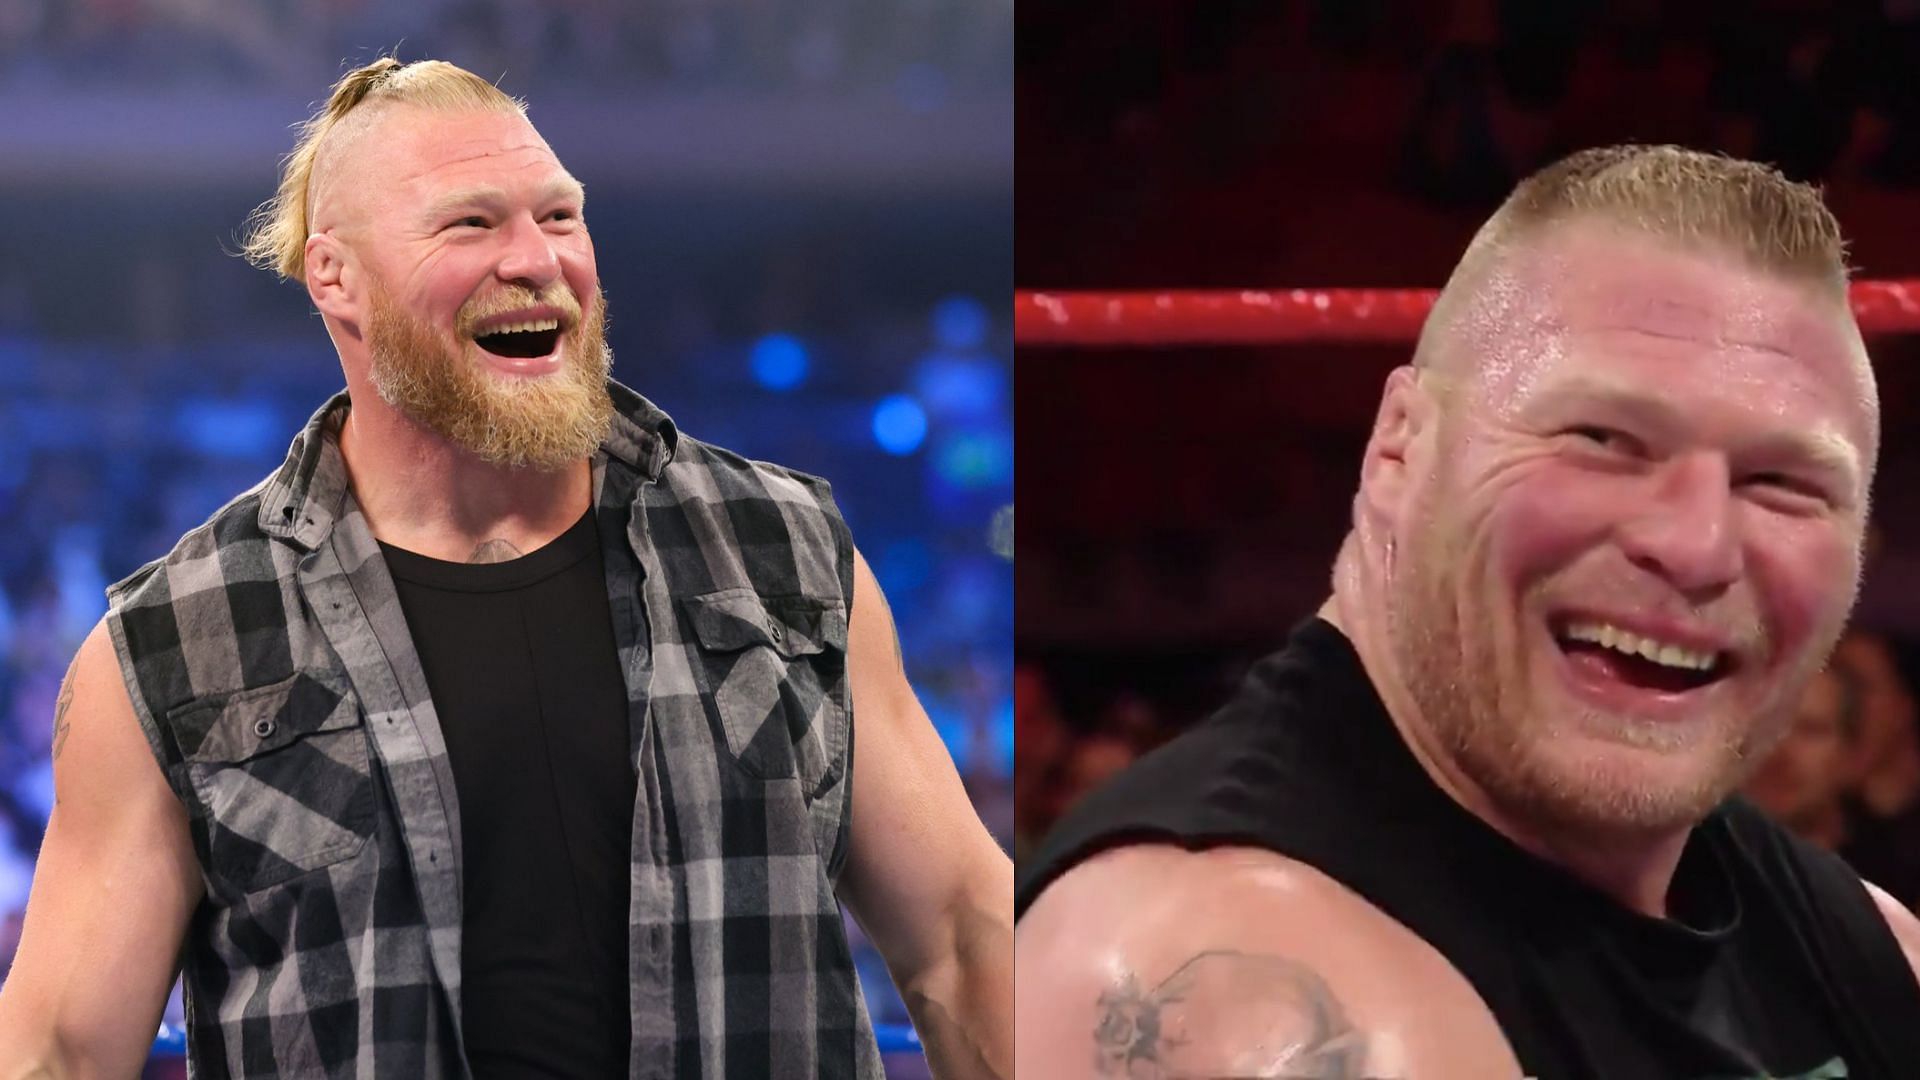 Brock Lesnar has always been dominant in WWE